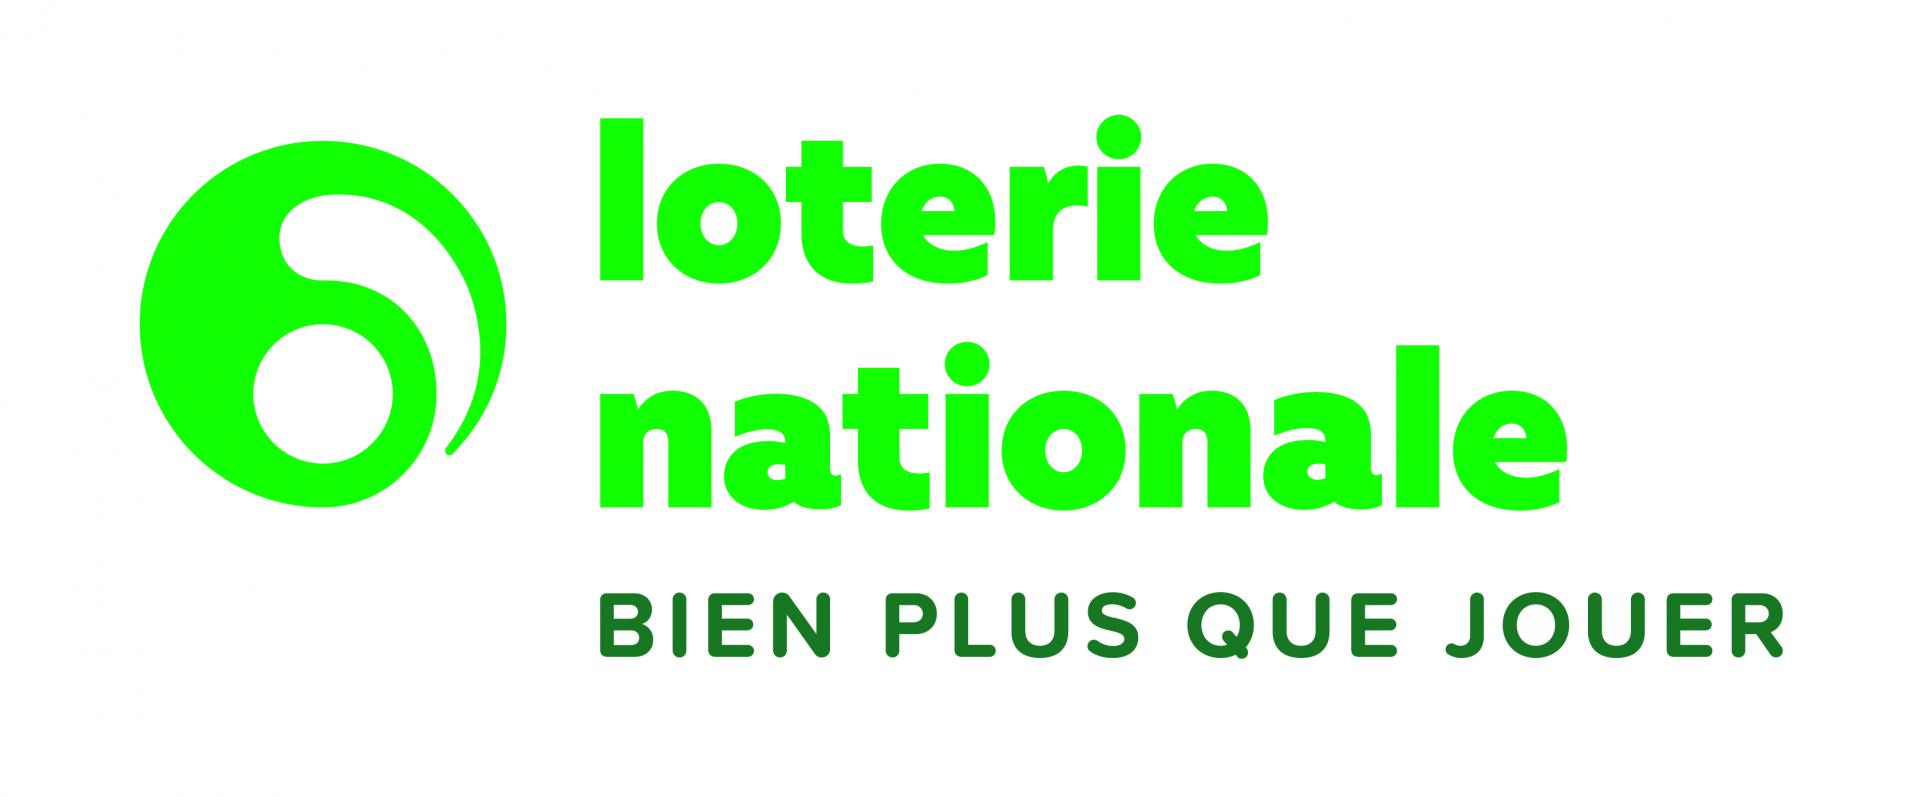 Logo loterie horizontal safezone baseline fr cmyk 01 29434